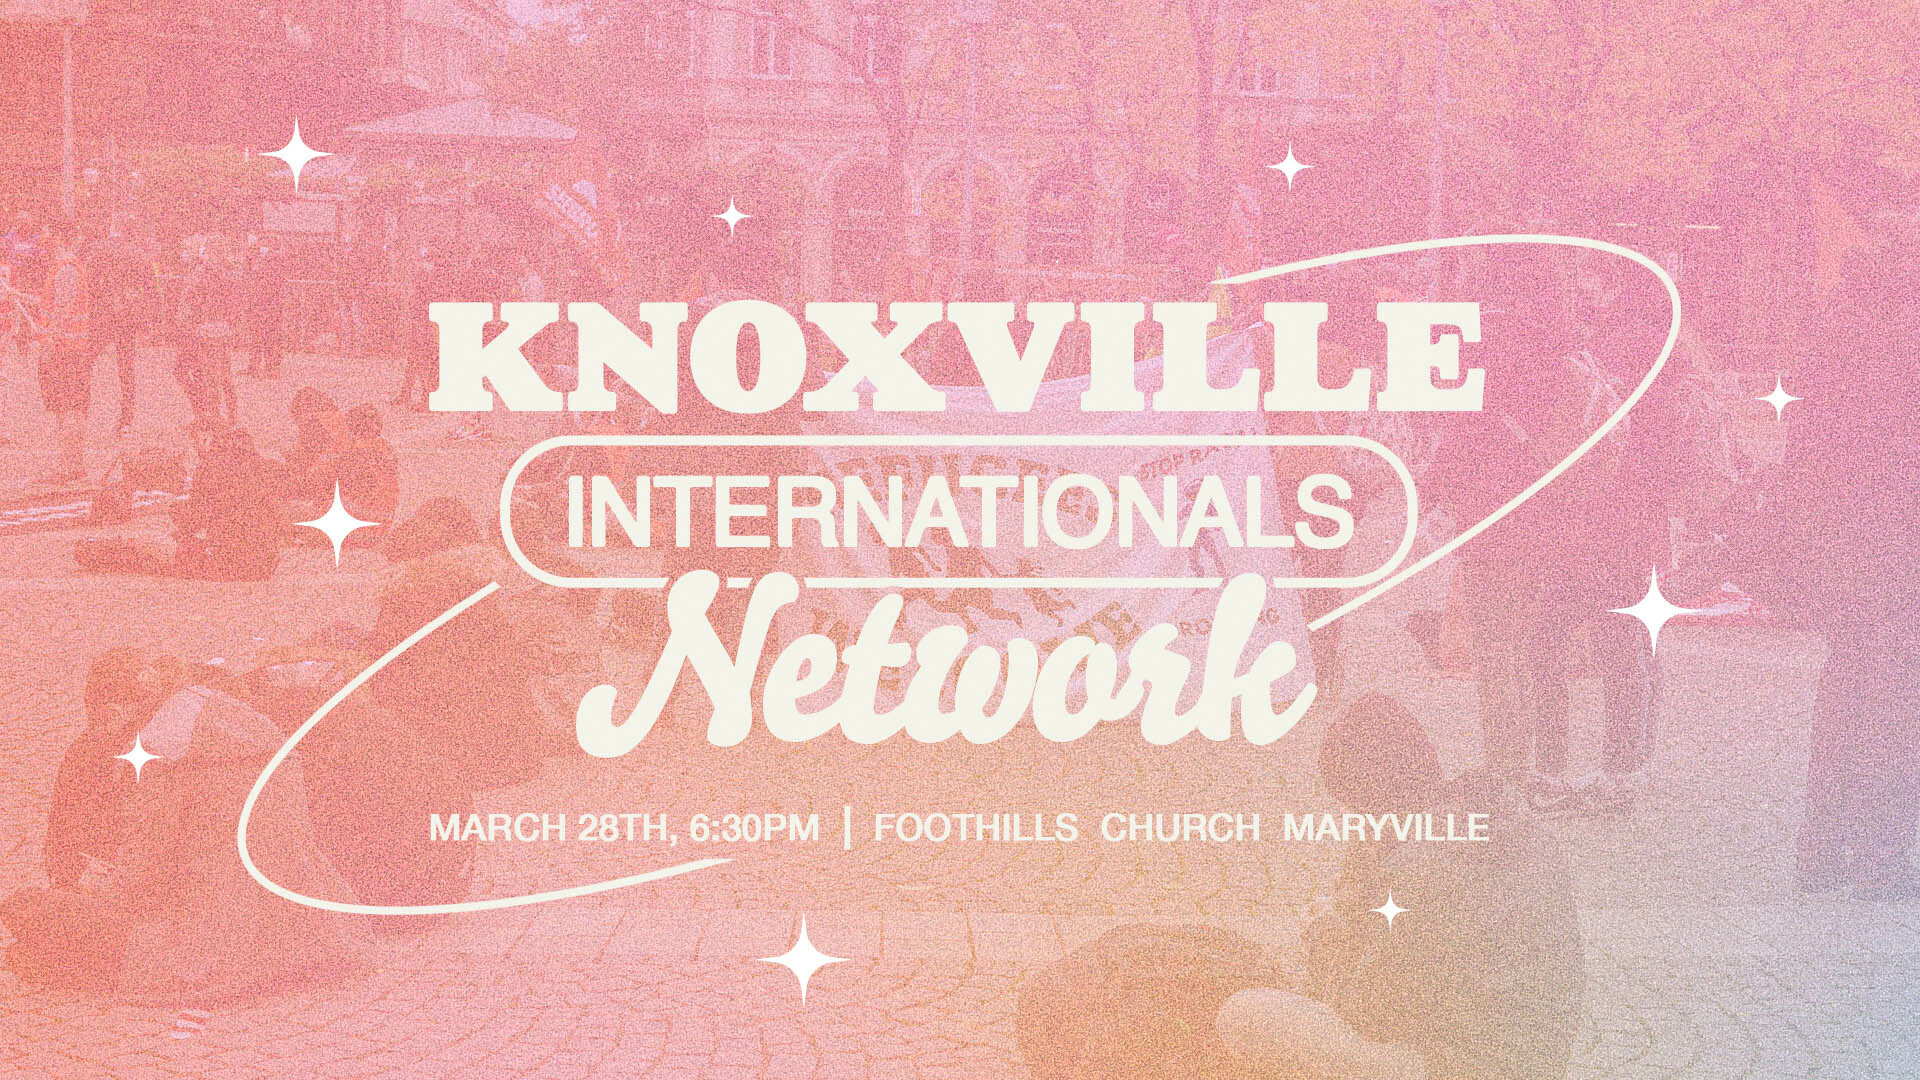 Knoxville Internationals Network